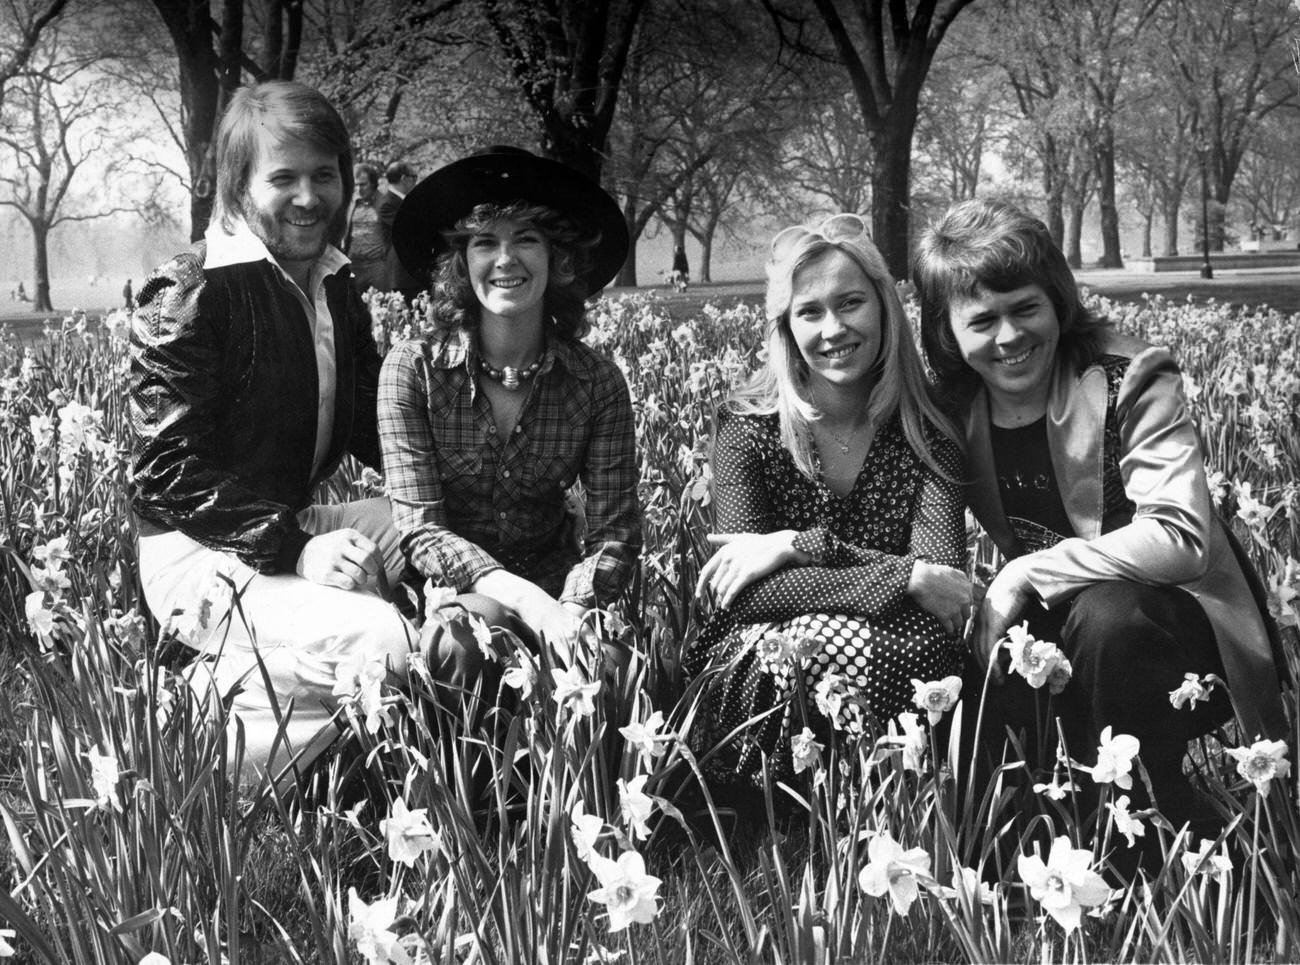 Benny Andersson, Anni-Frid Lyngstad, Agnetha Faltskog and Bjorn Ulvaeus, sitting amongst the daffodils in London